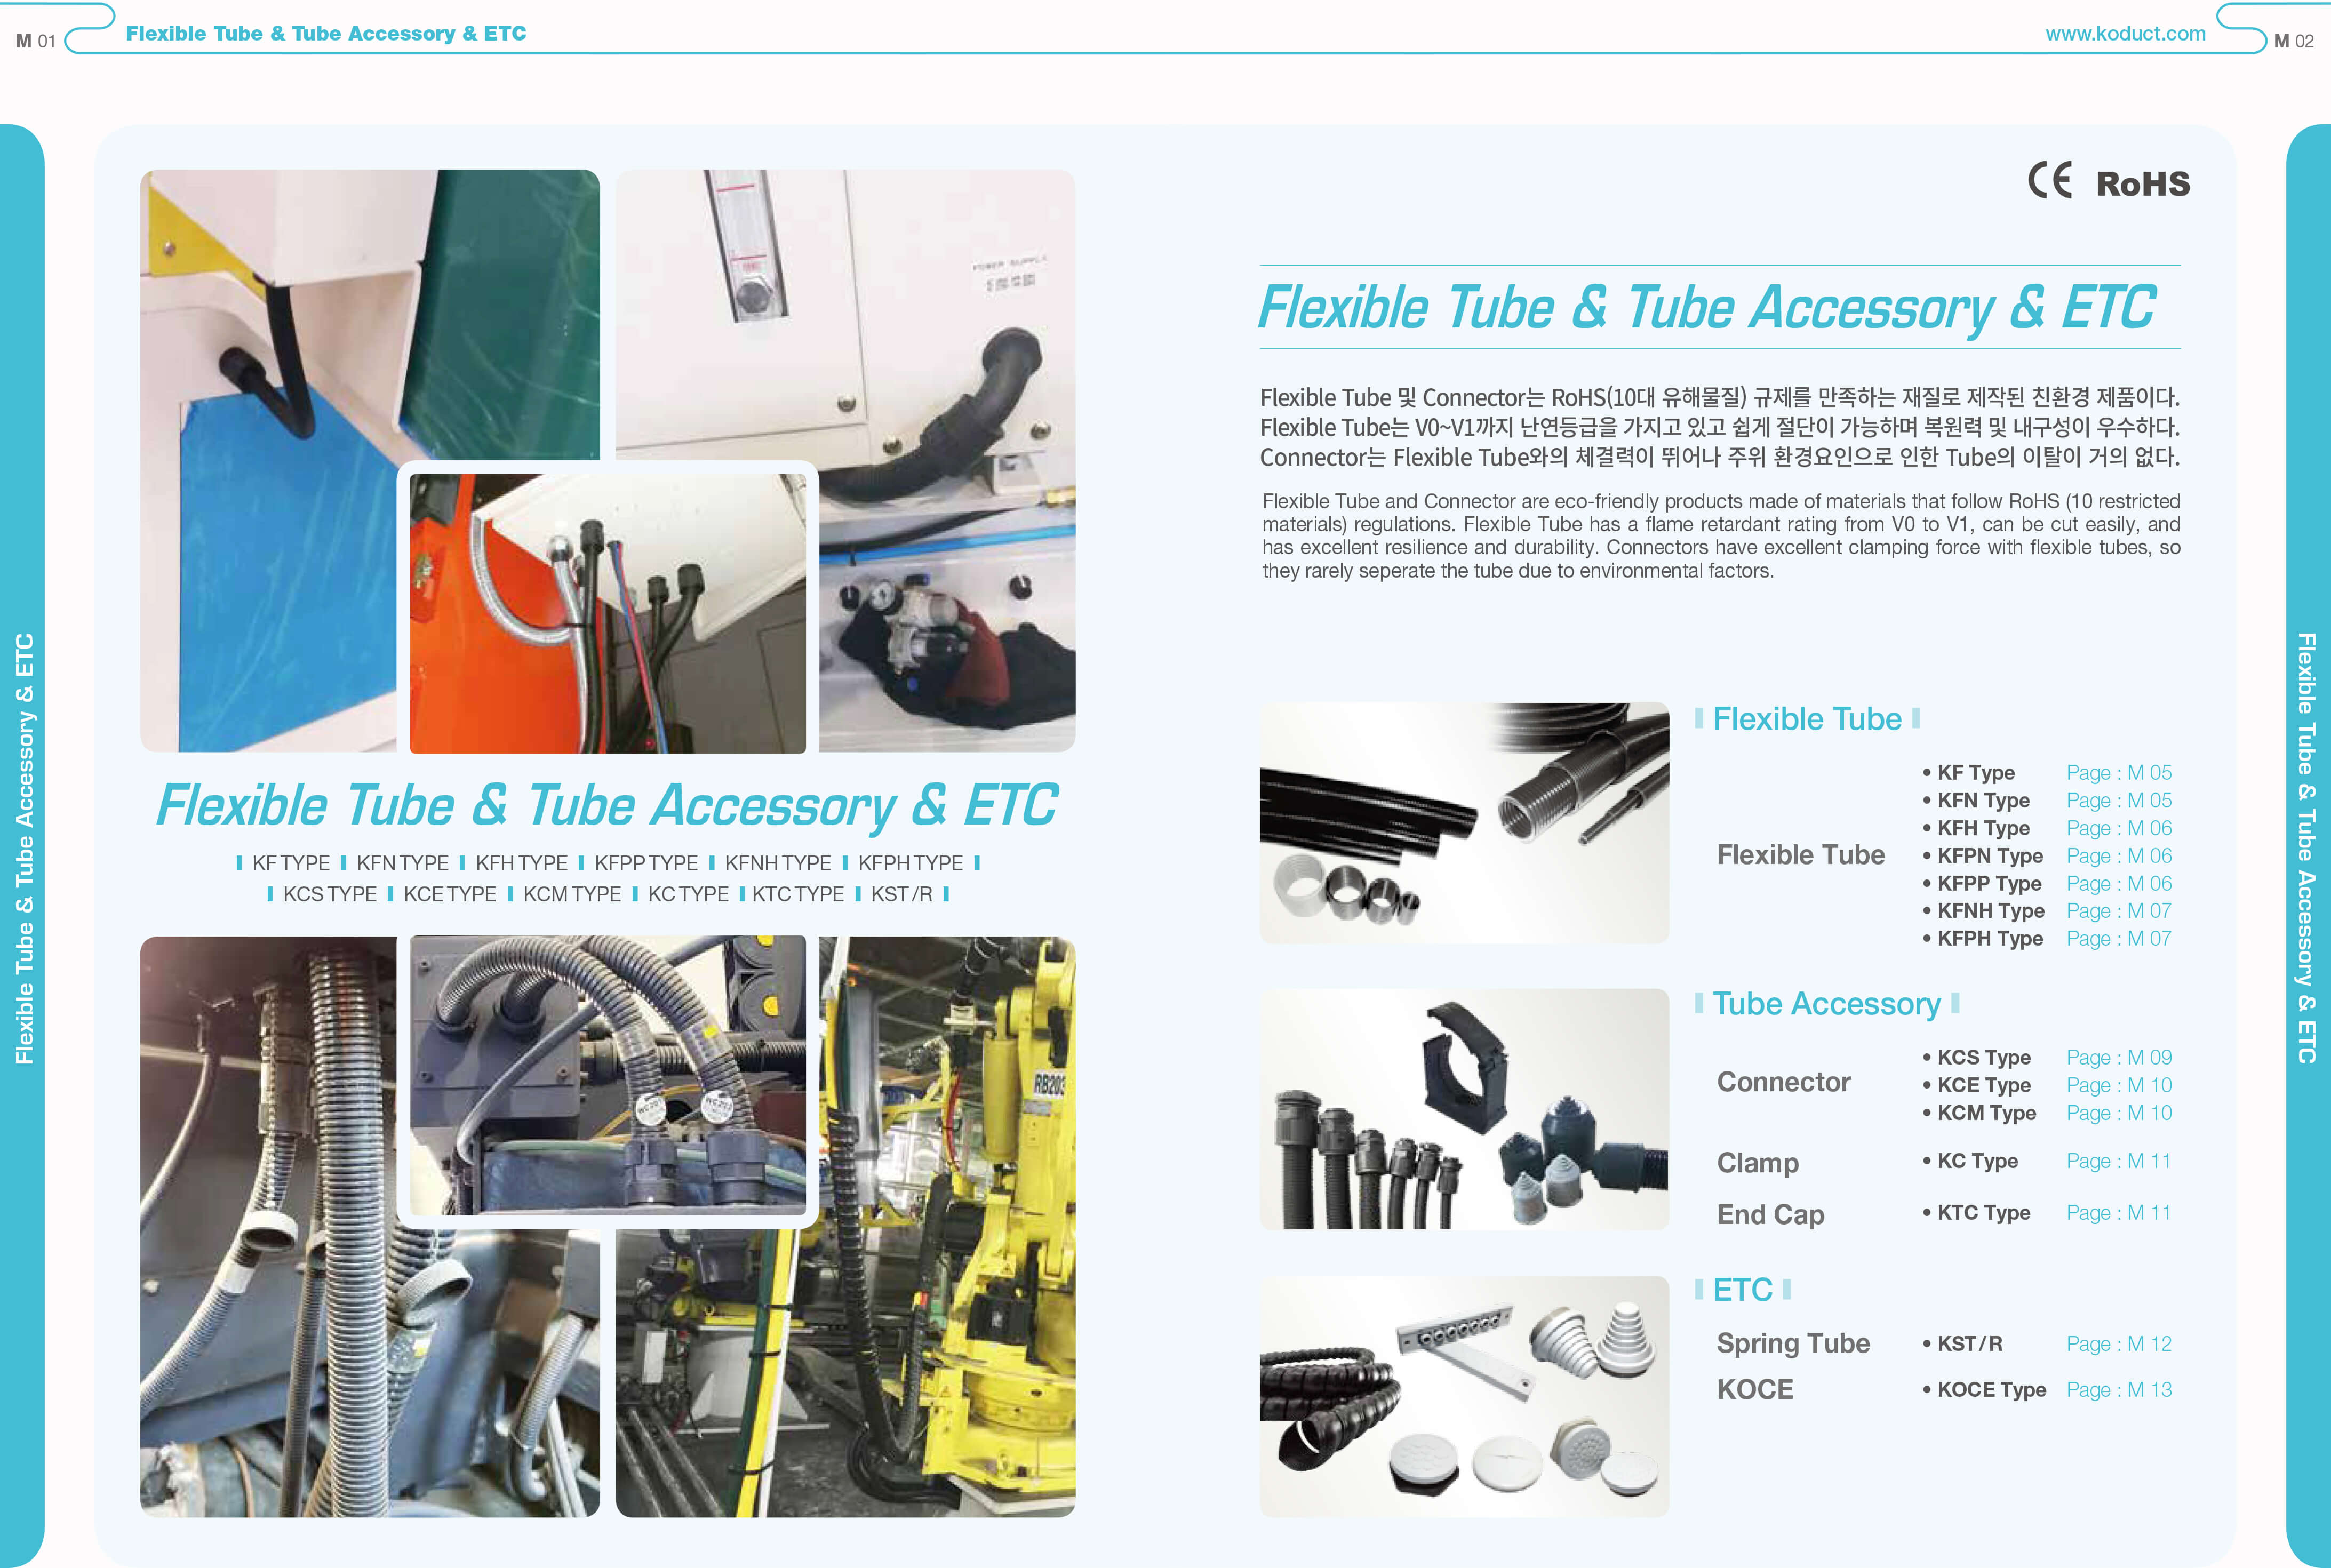 Flexible Tube, Accessories & ETC